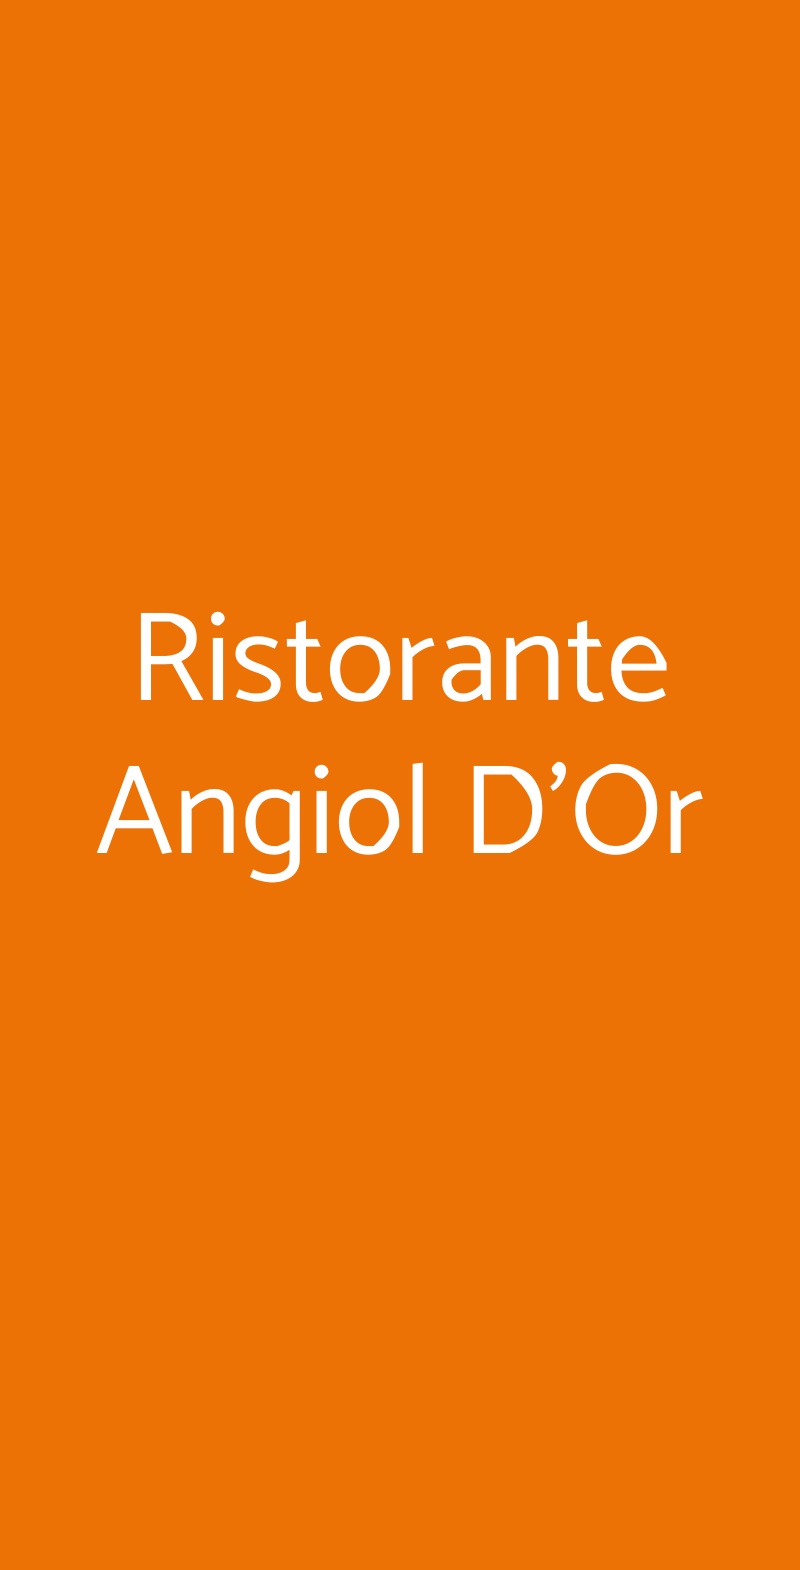 Ristorante Angiol D'Or Parma menù 1 pagina